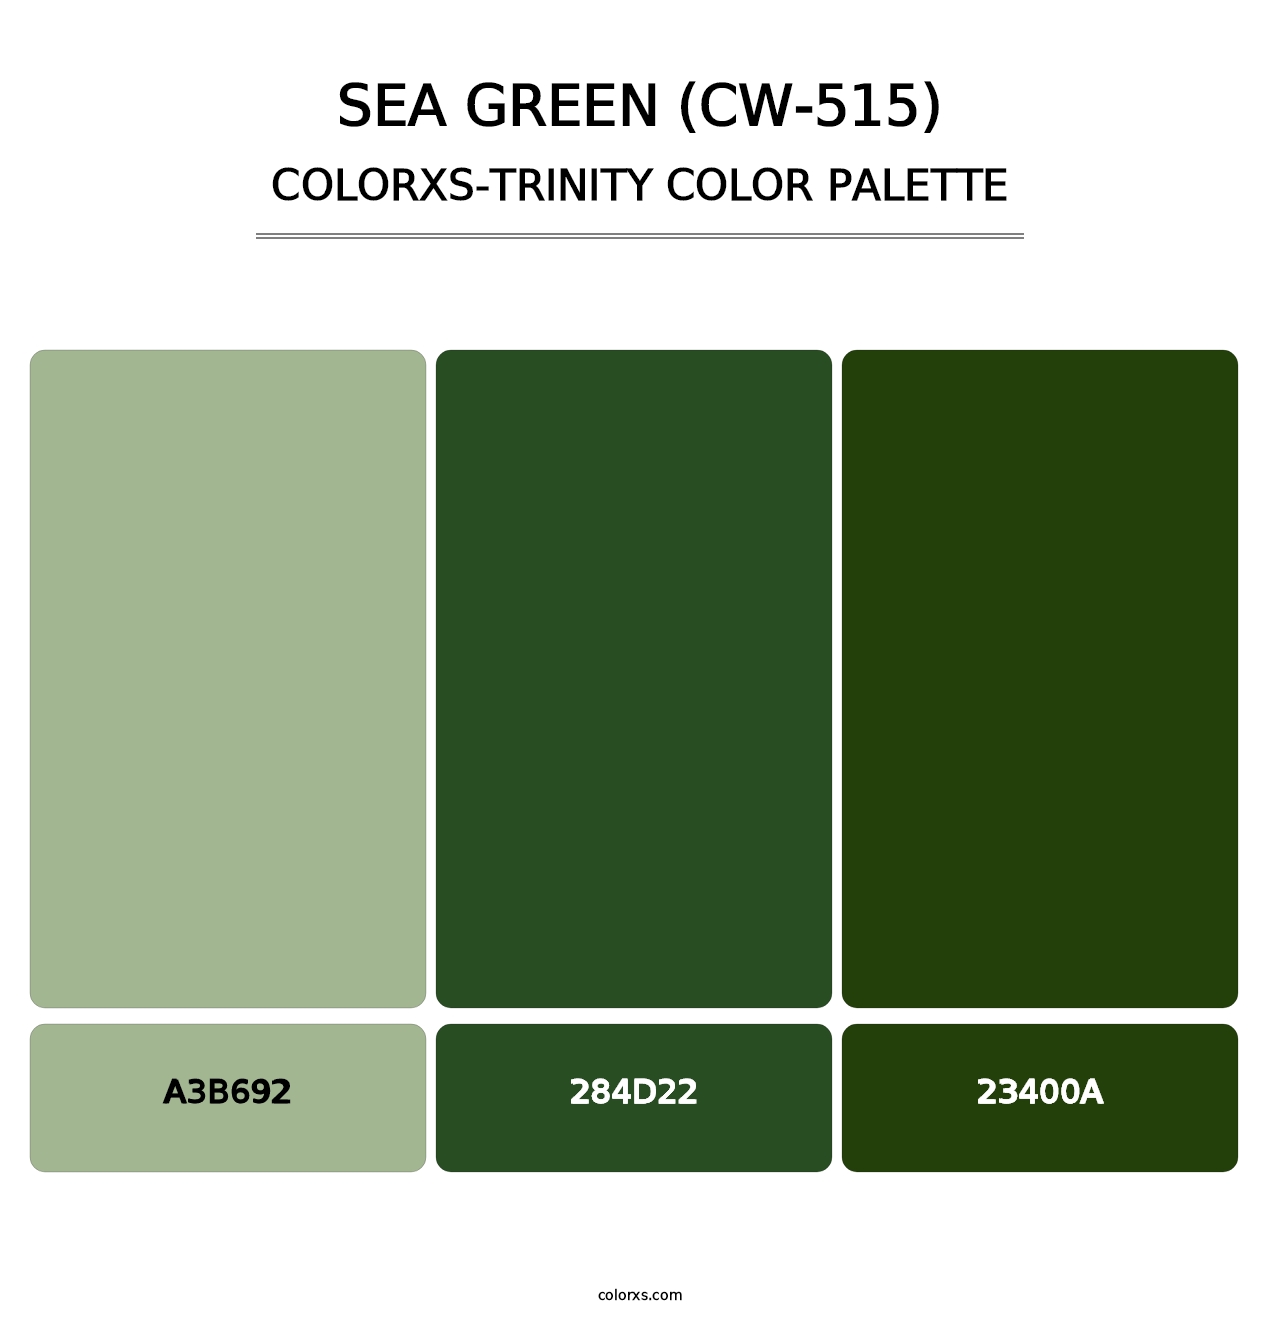 Sea Green (CW-515) - Colorxs Trinity Palette